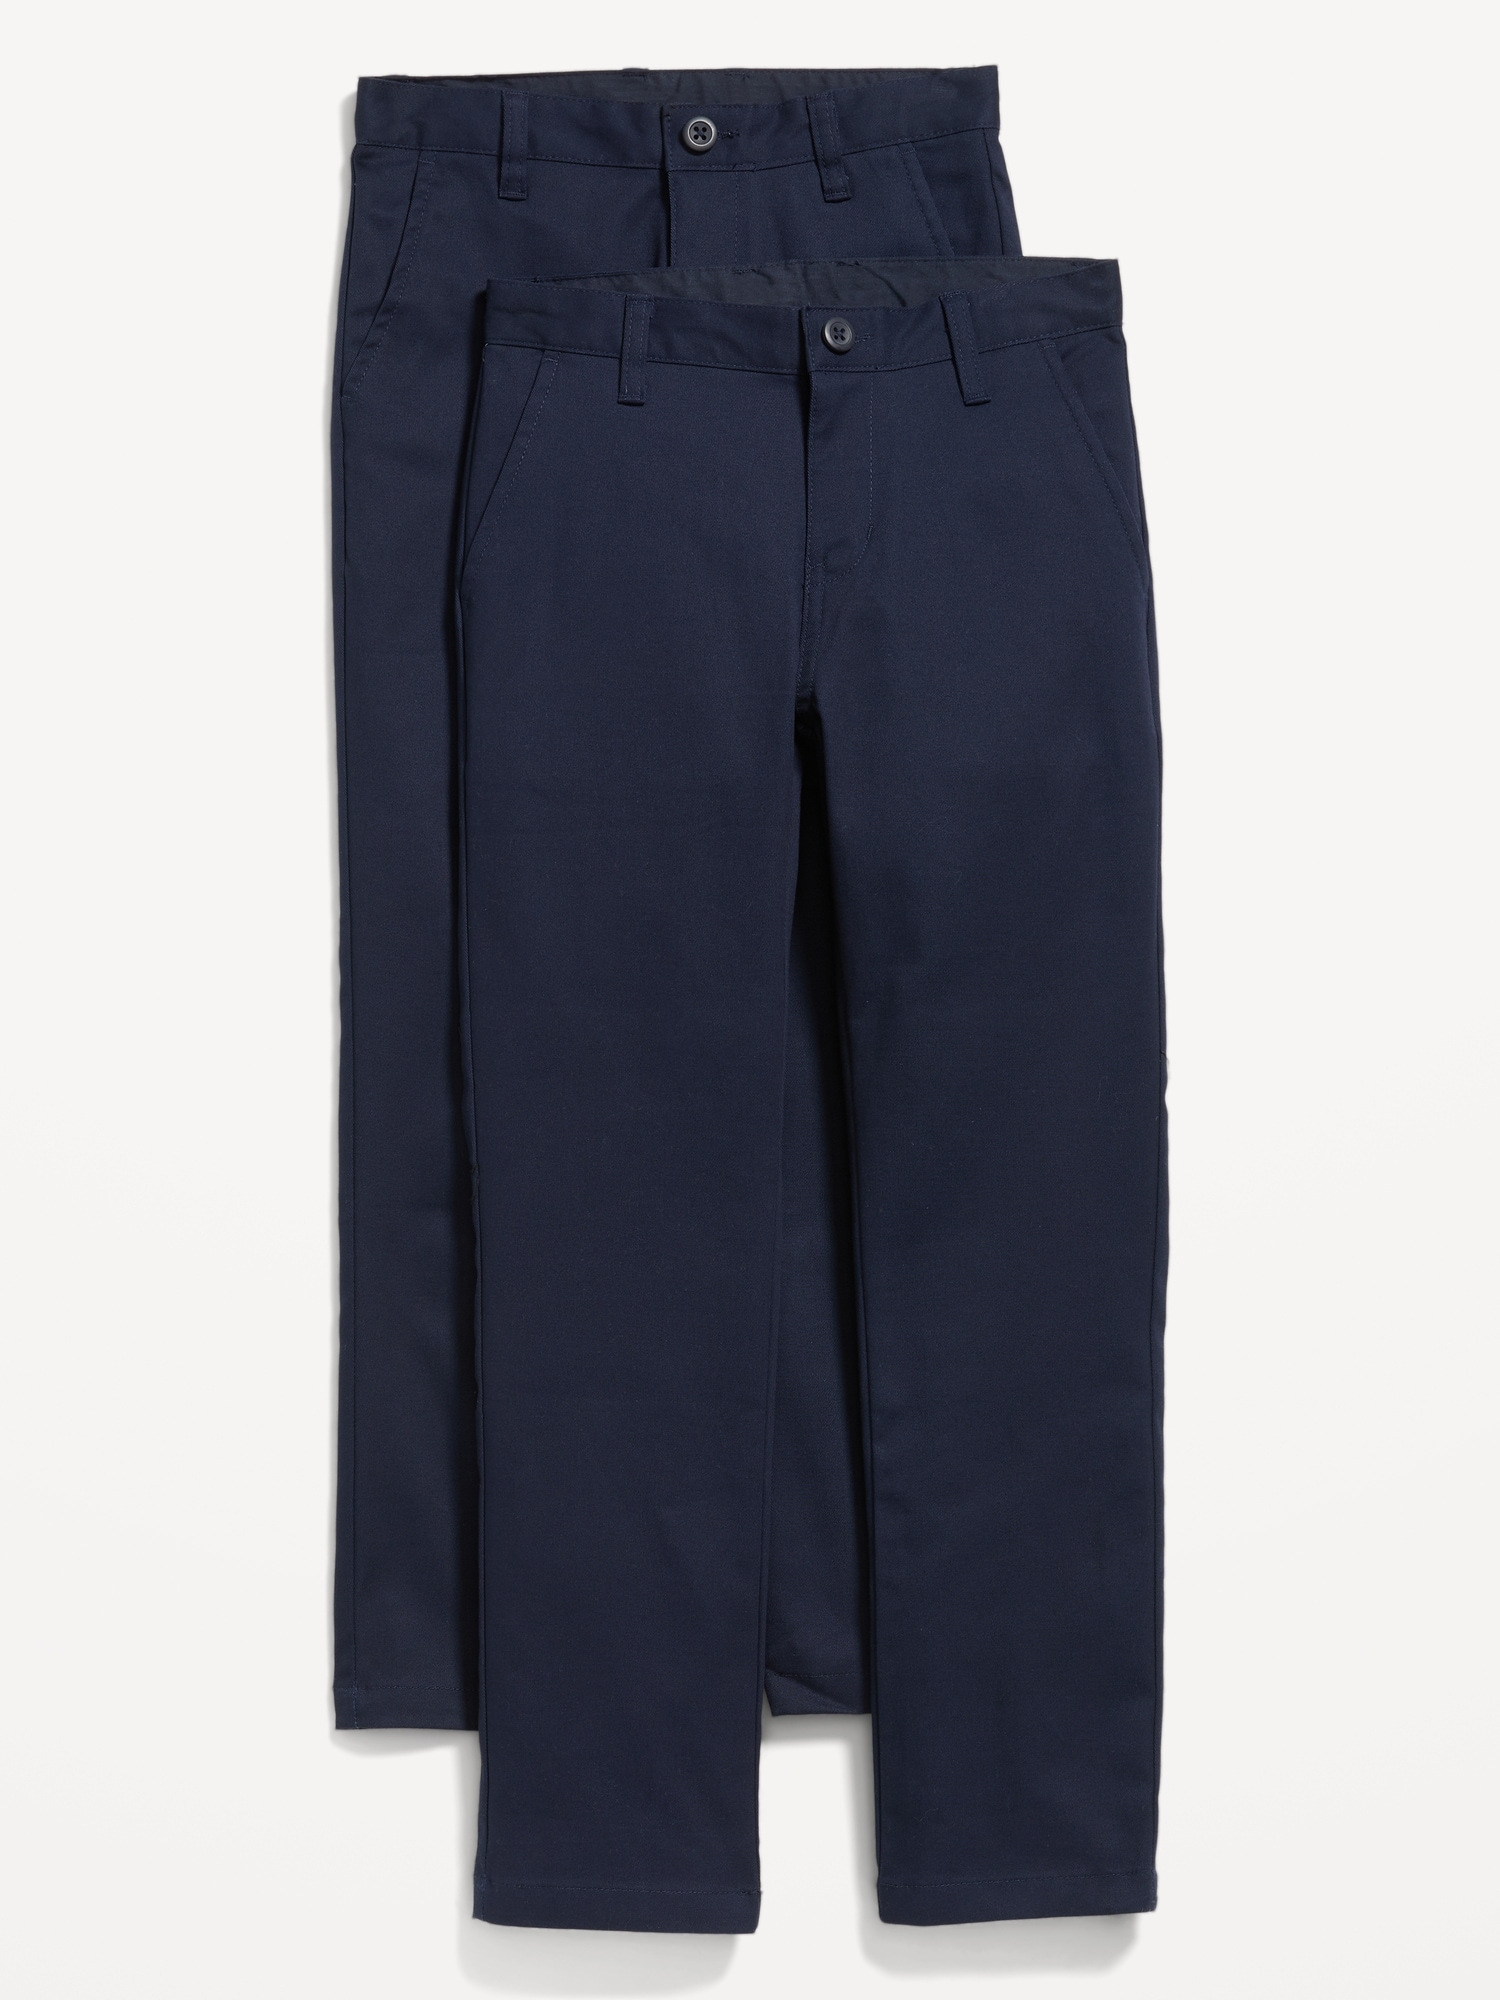 Slim School Uniform Chino Pants 2-Pack for Boys Hot Deal